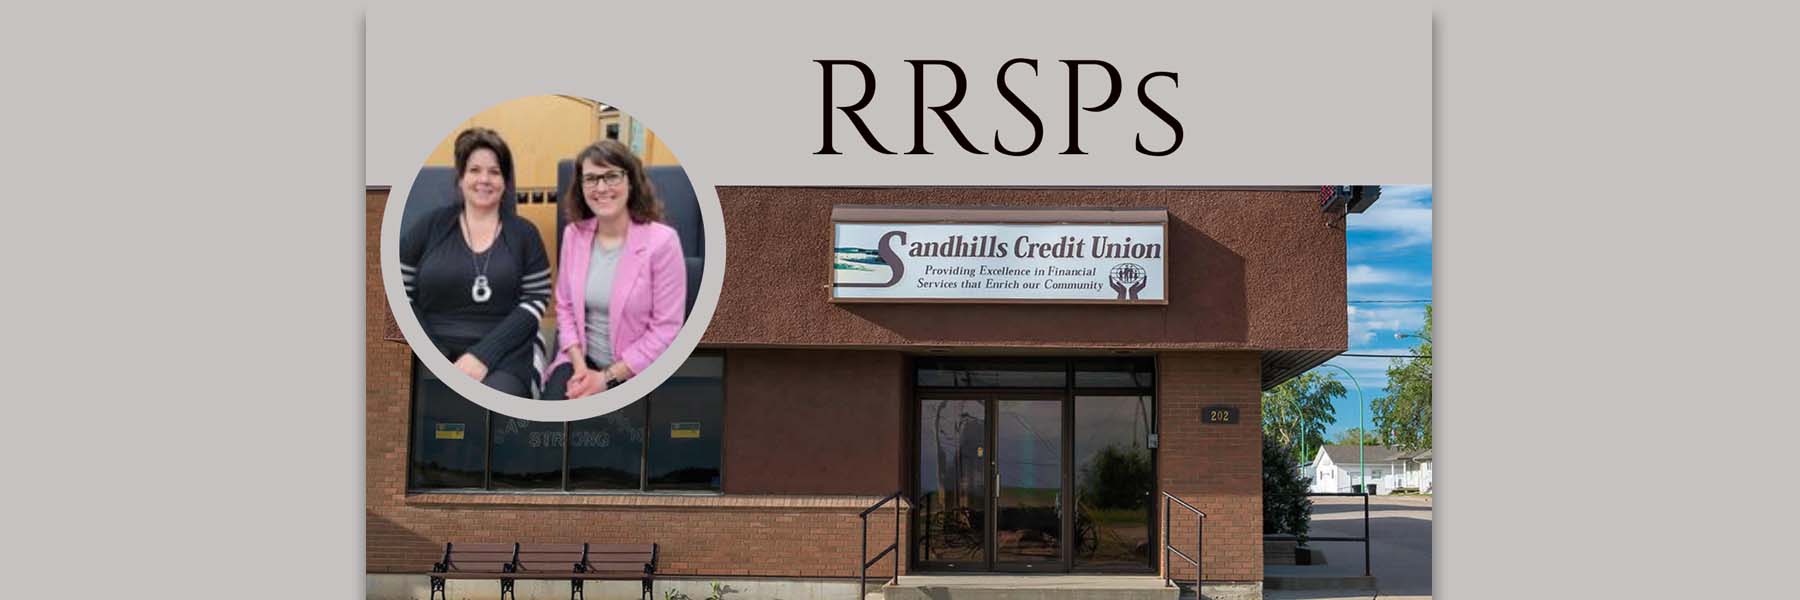 RRSPs at Sandhills Credit Union